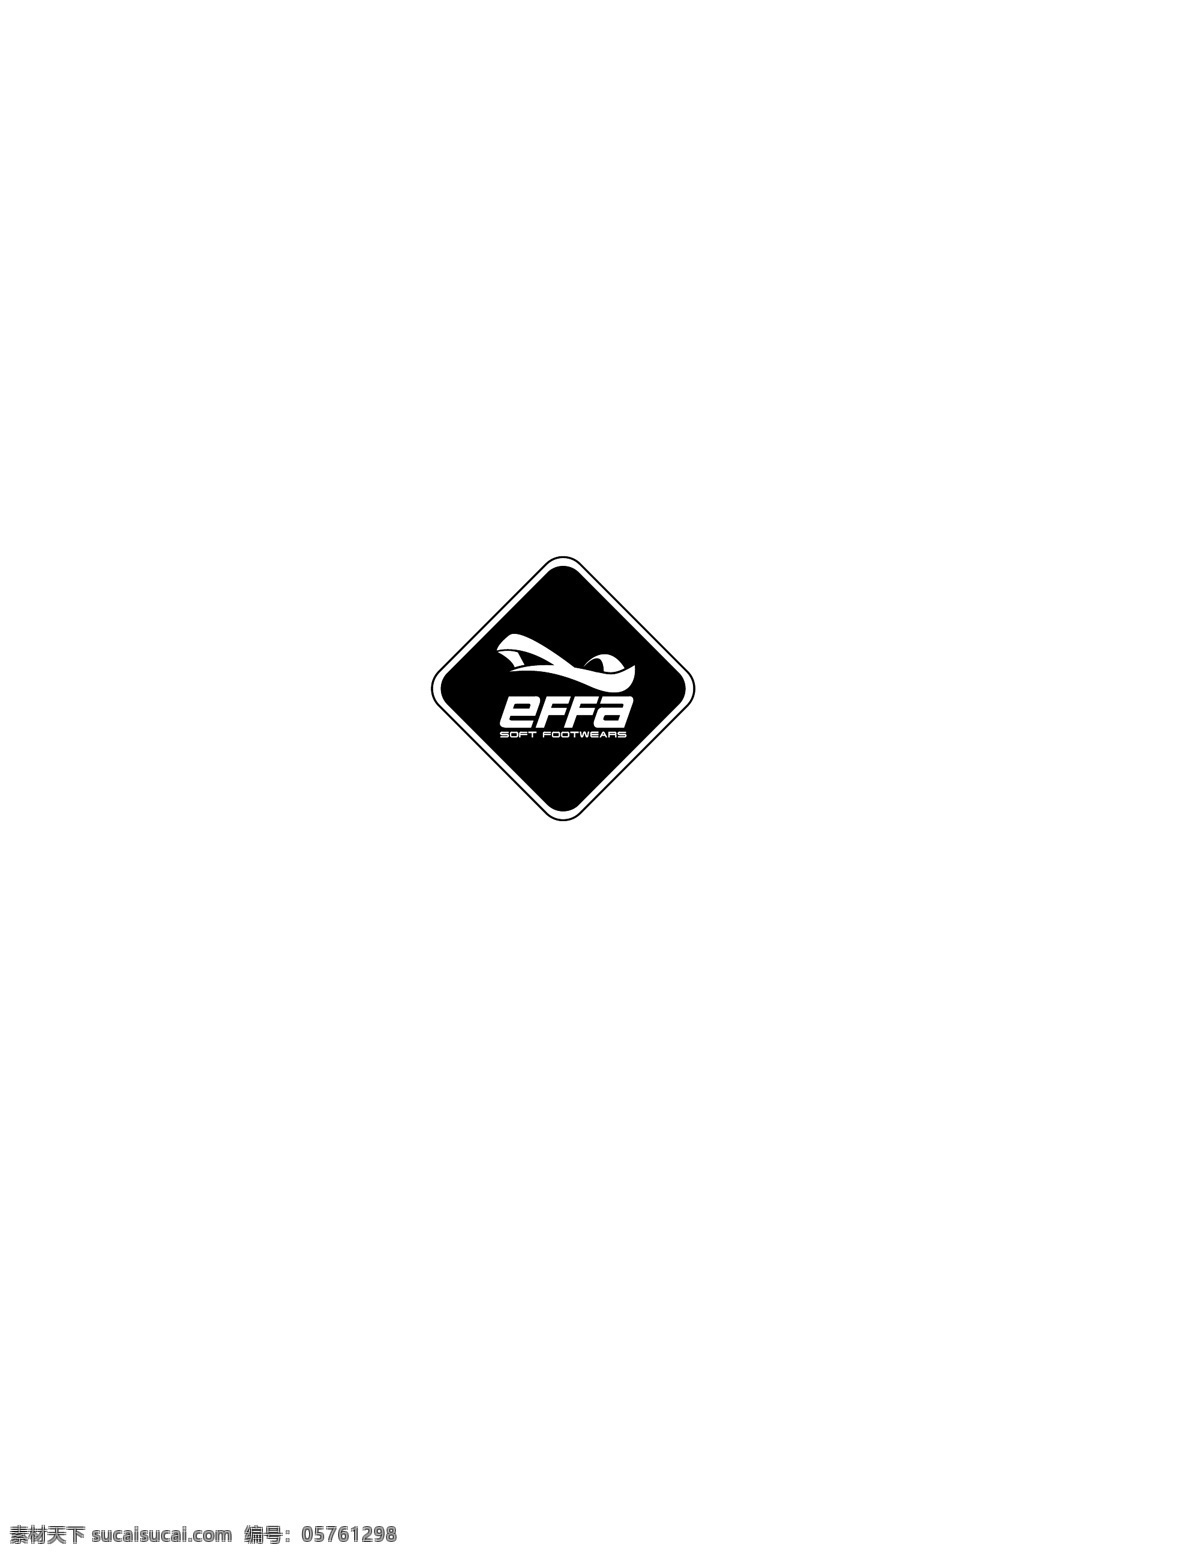 effa logo大全 logo 设计欣赏 商业矢量 矢量下载 服饰 品牌 标志设计 欣赏 网页矢量 矢量图 其他矢量图